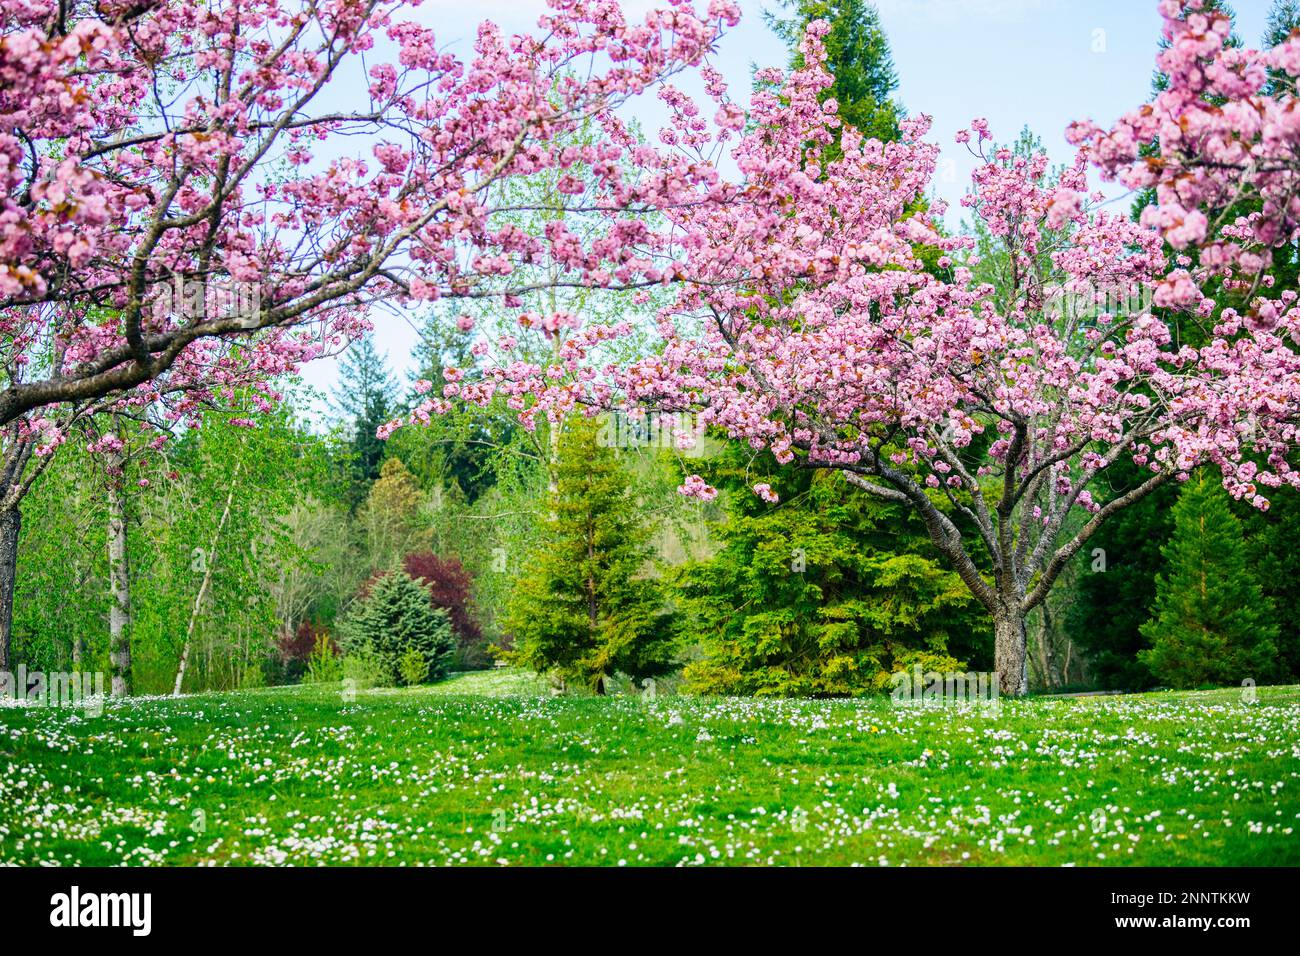 Pink cherry blossom in park, Battle Point Park, Bainbridge Island, Washington, USA Stock Photo